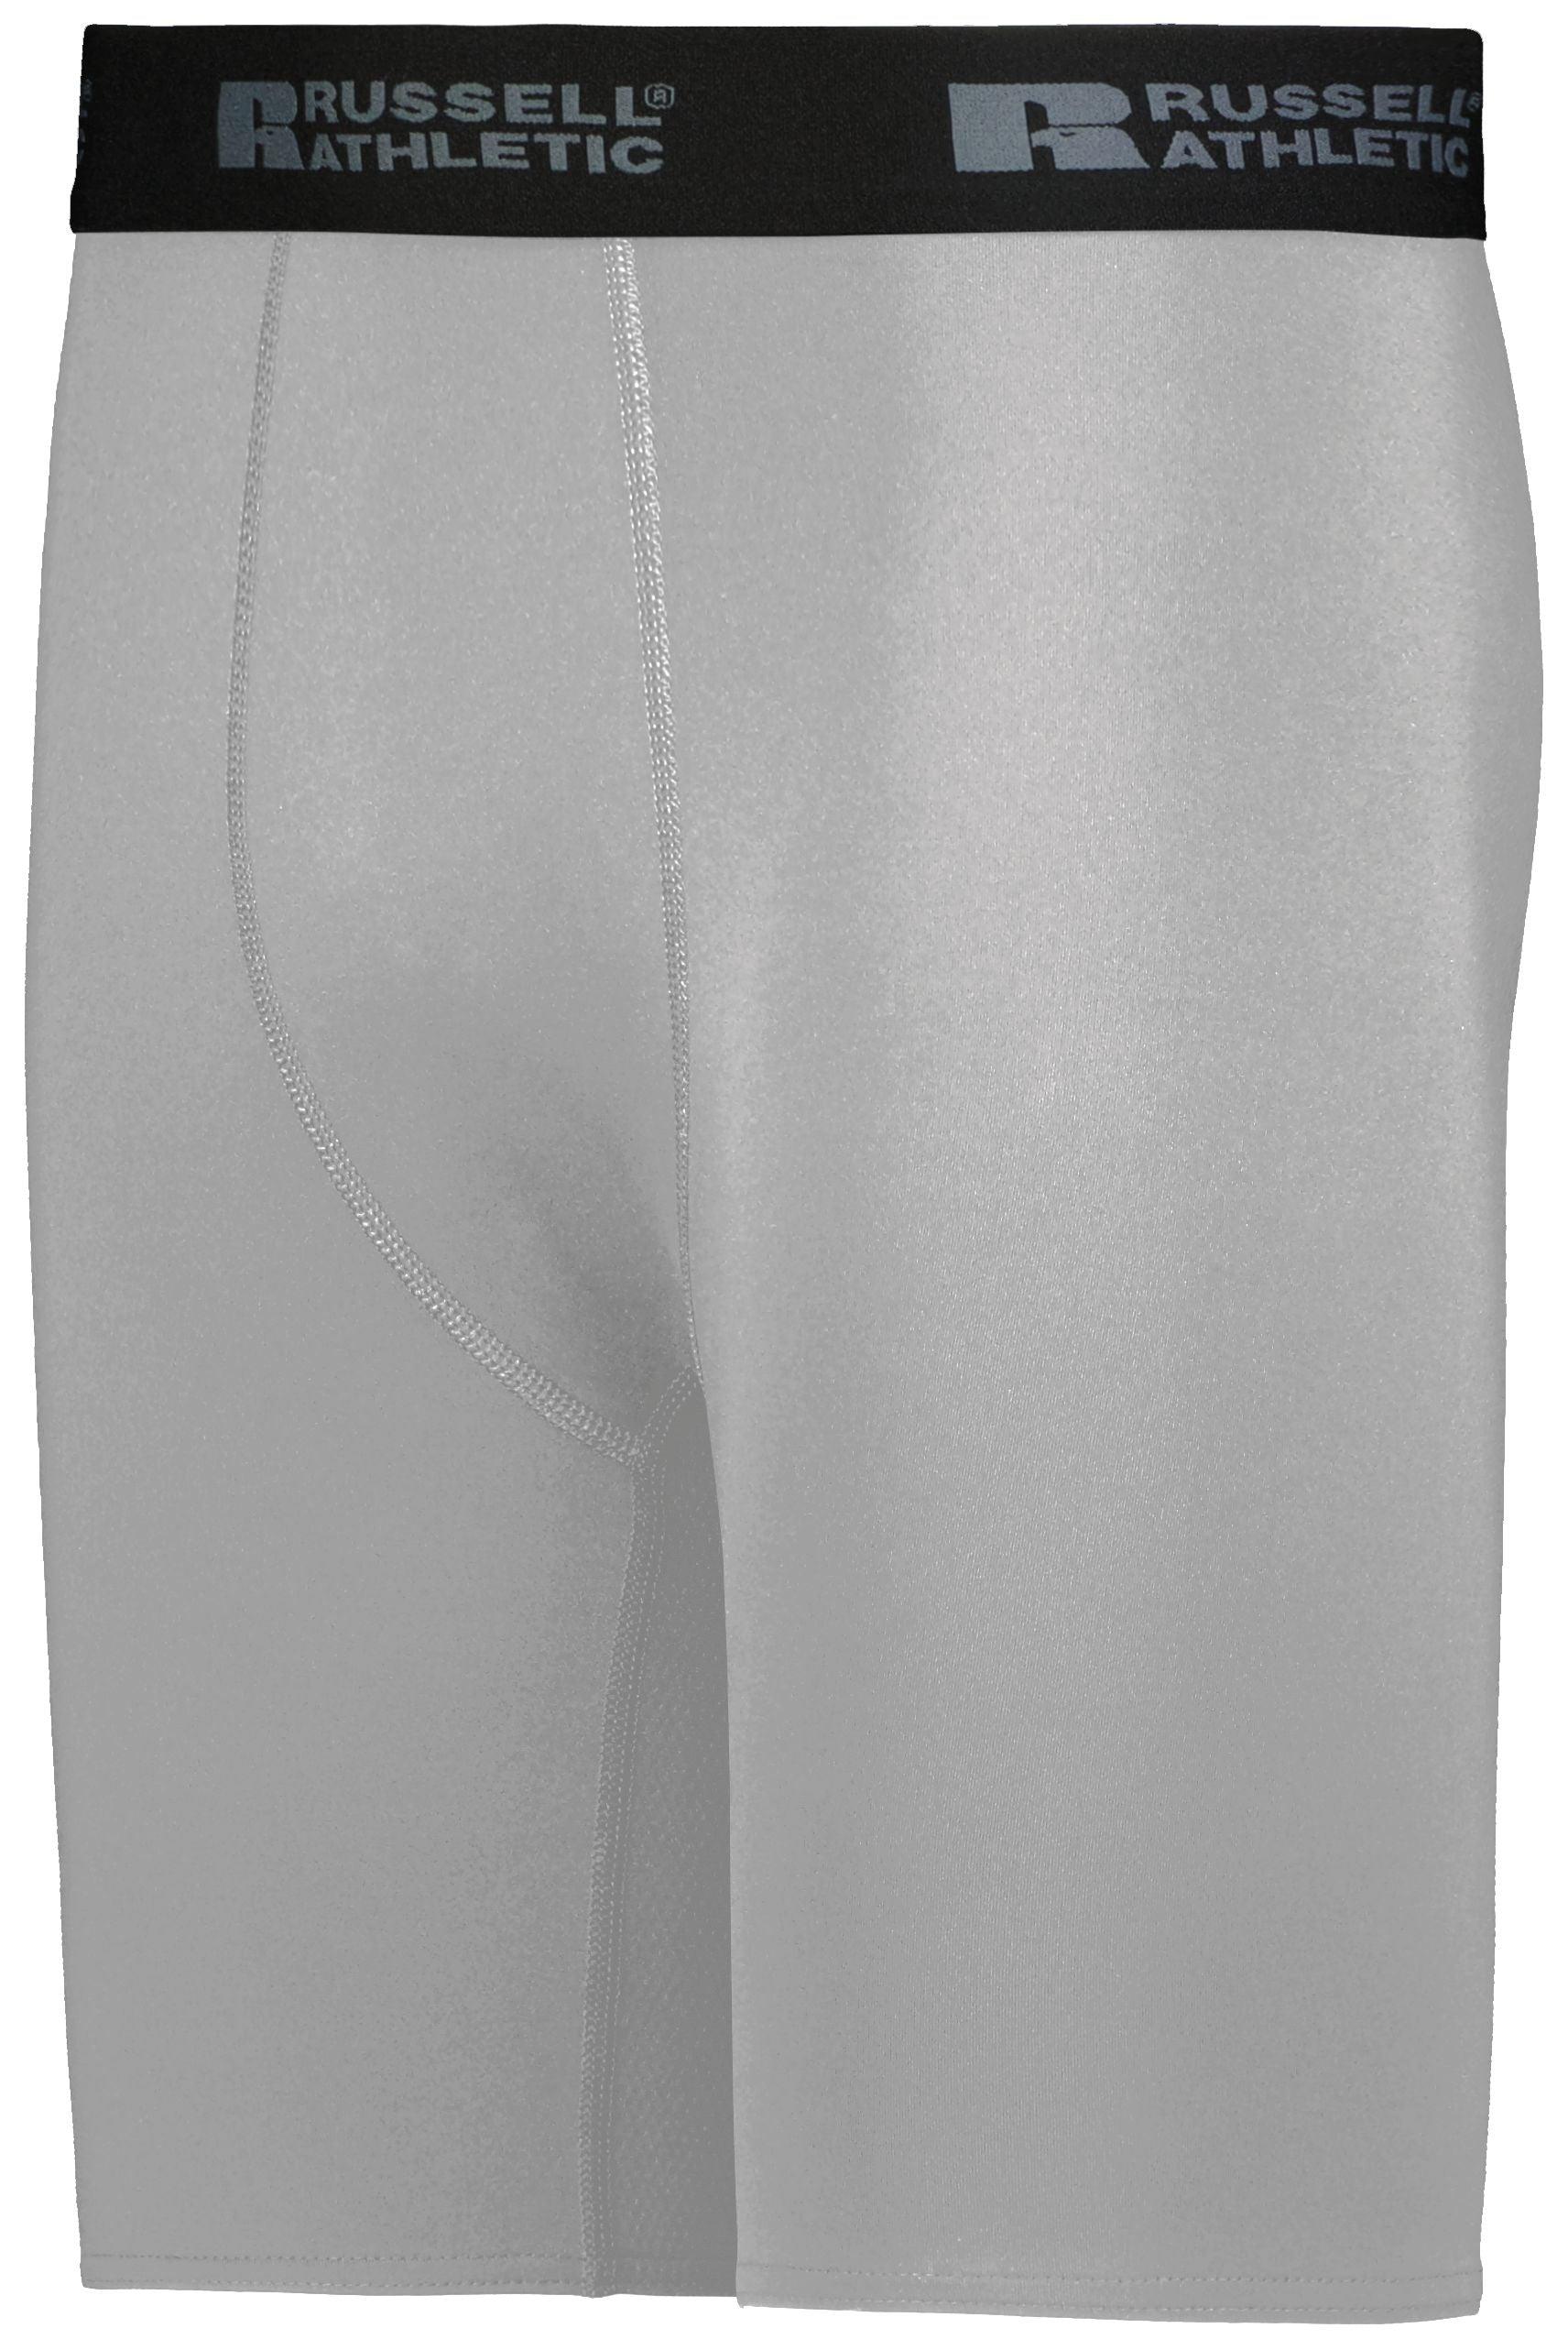 Coolcore® Compression Shorts - Dresses Max